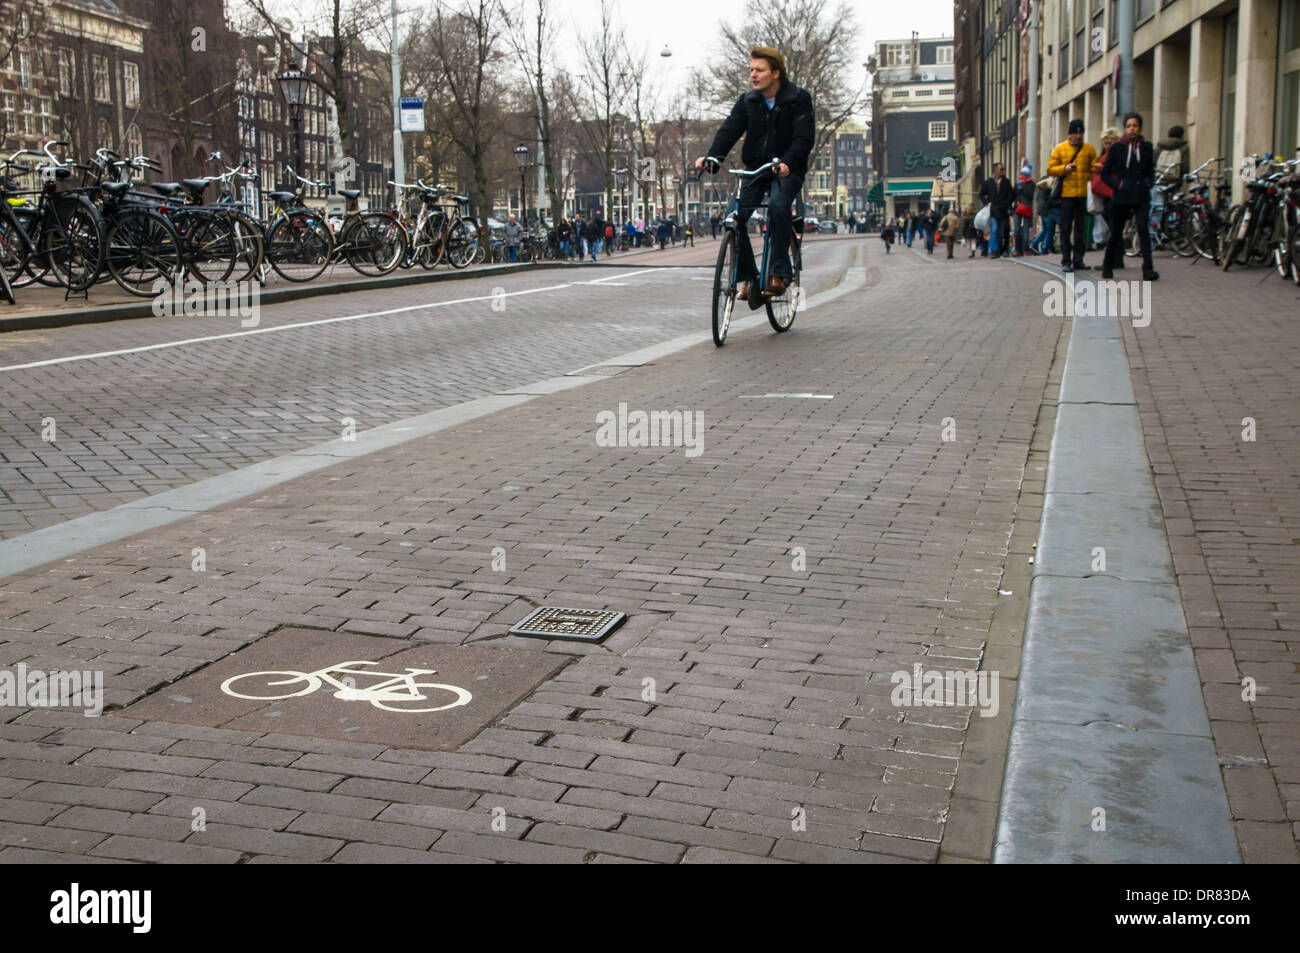 Cyclist on bike lane, Amsterdam Netherlands Stock Photo